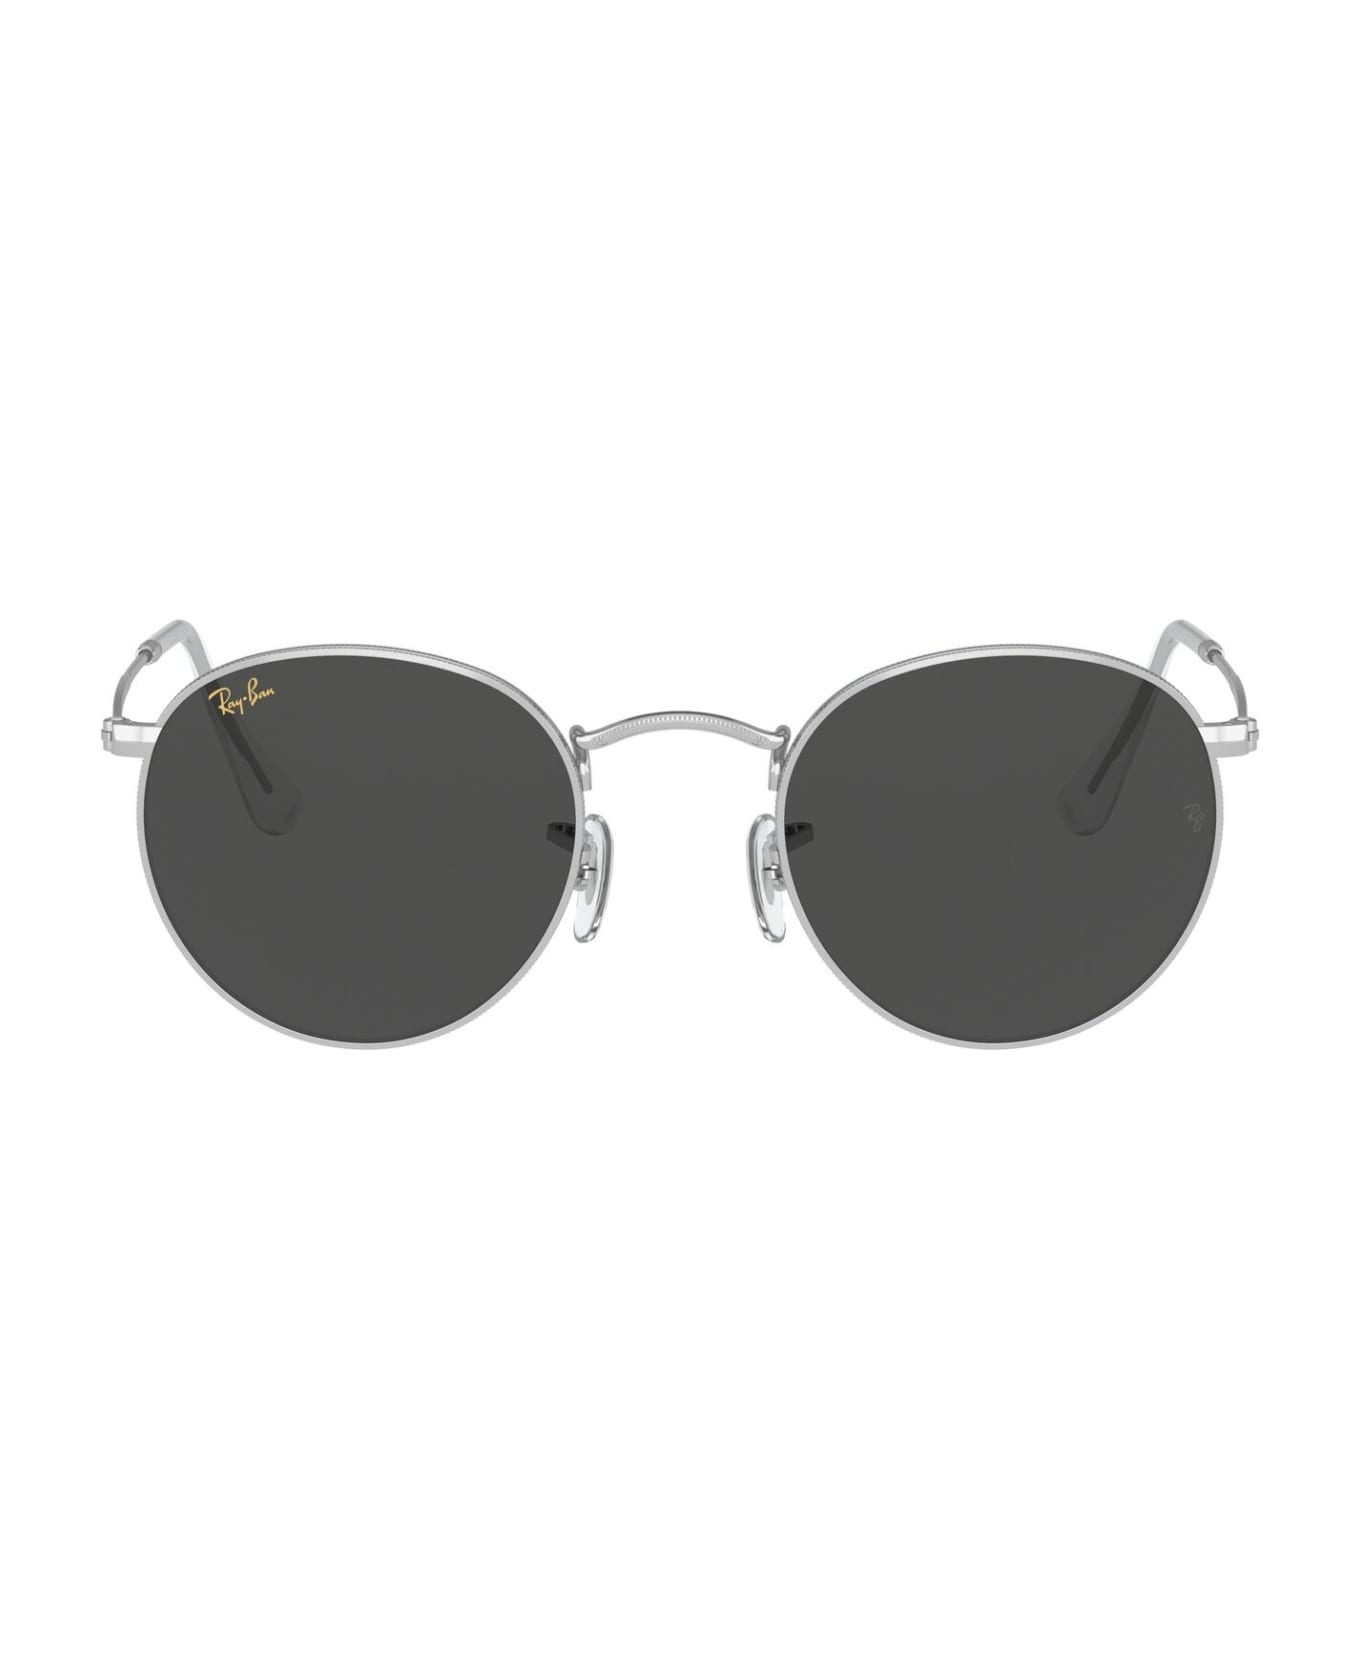 Ray-Ban Sunglasses - Silver/Grigio サングラス